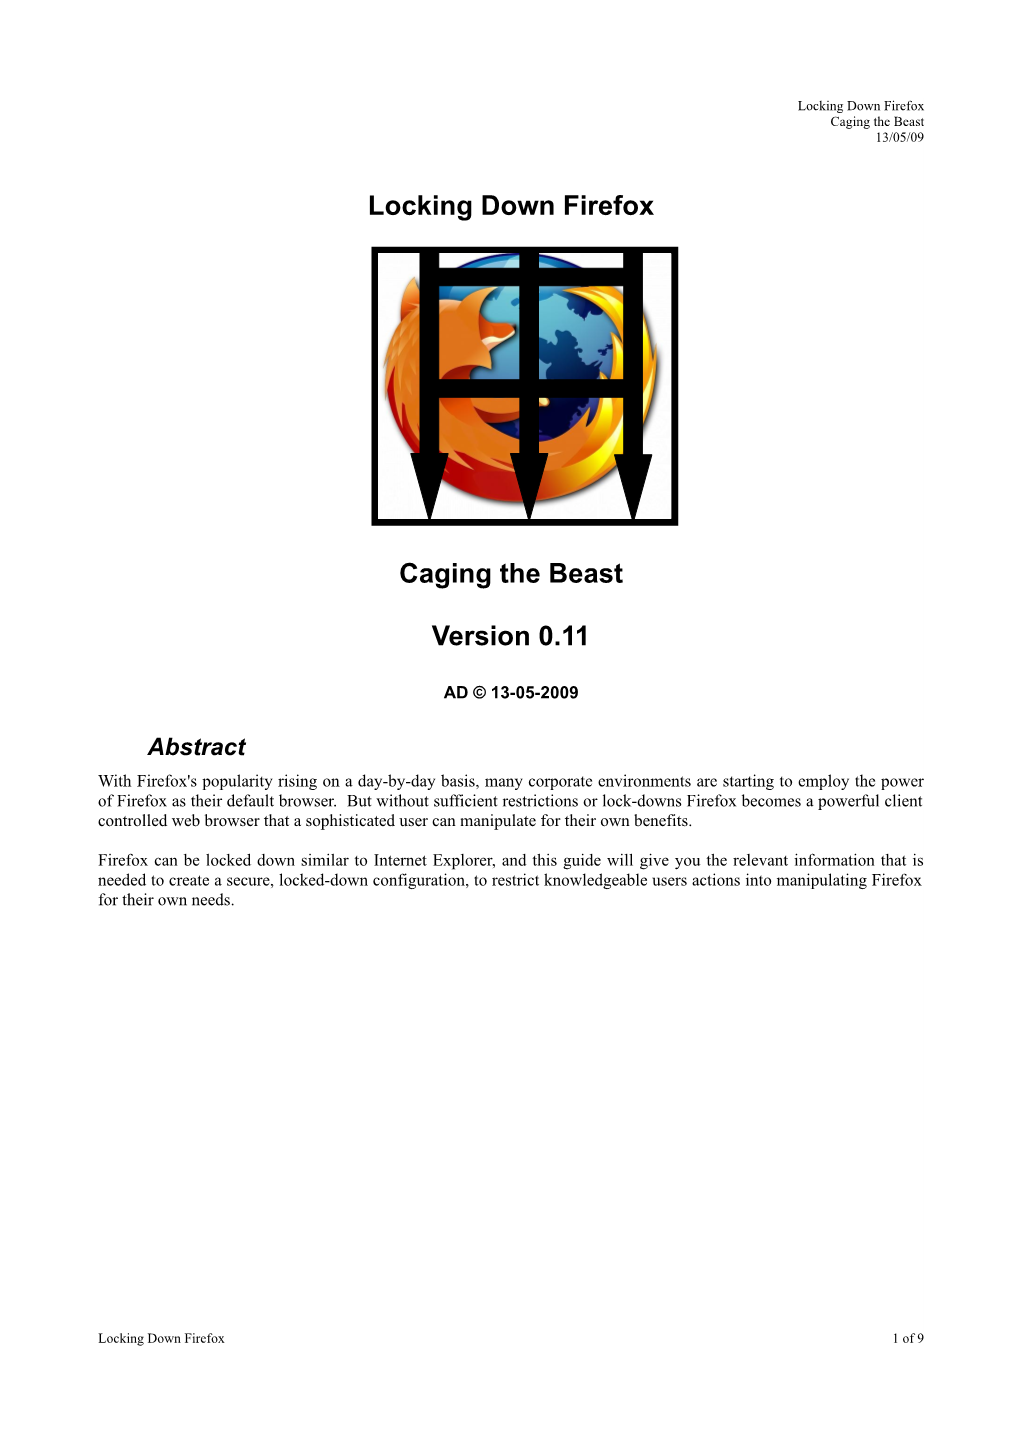 Locking Down Firefox Caging the Beast 13/05/09